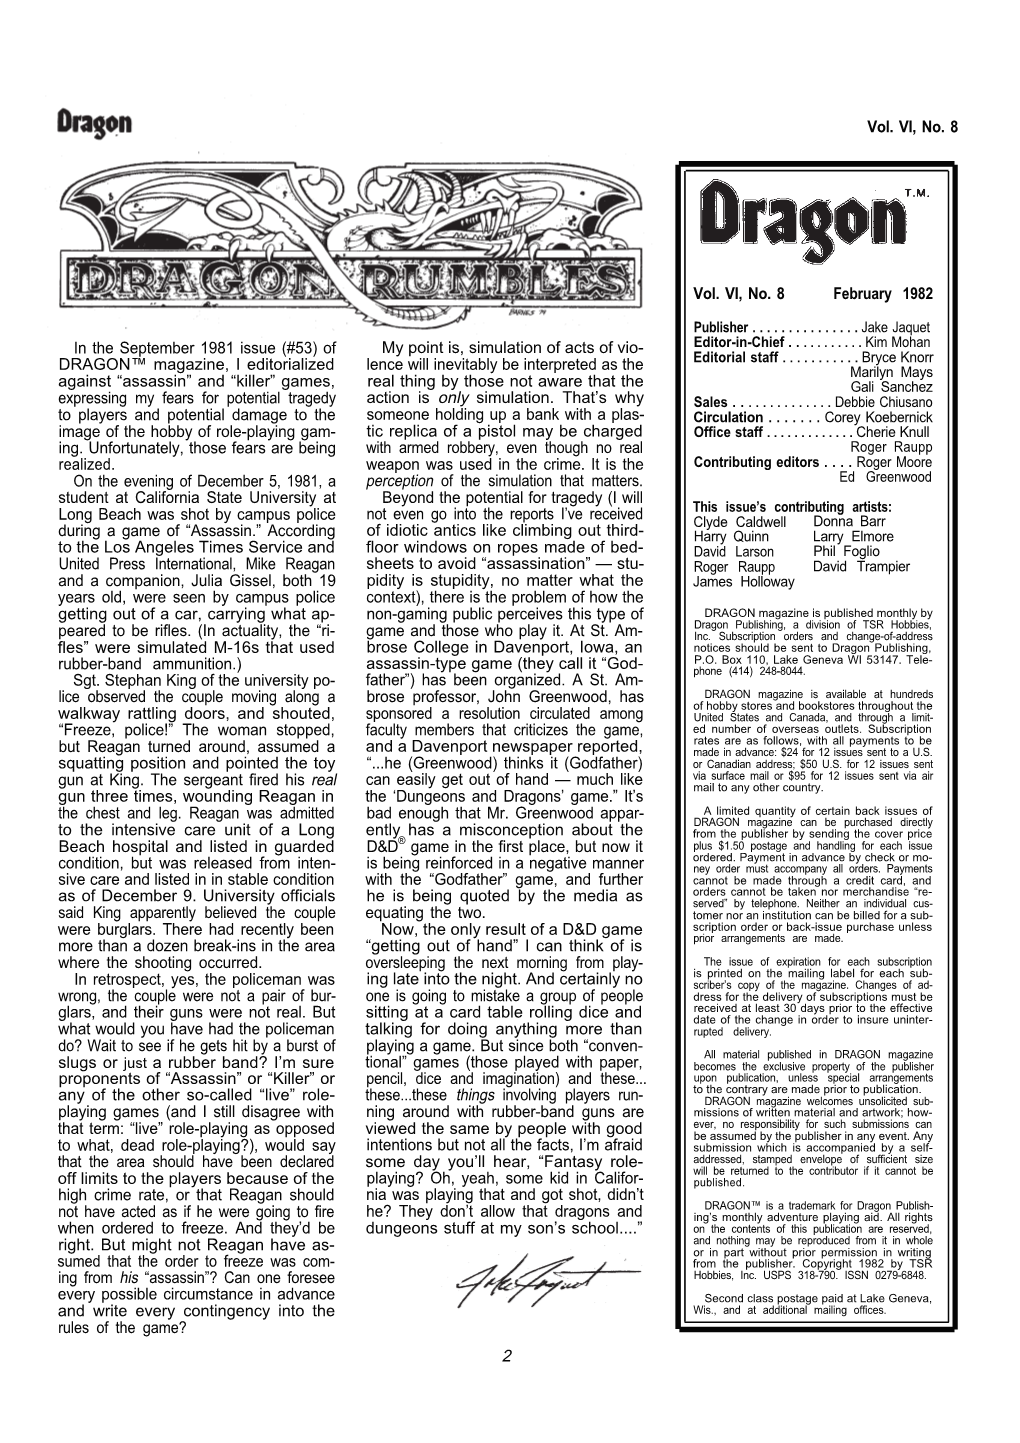 (#53) of DRAGON™ Magazine, I Editorialized Against “Assassin”